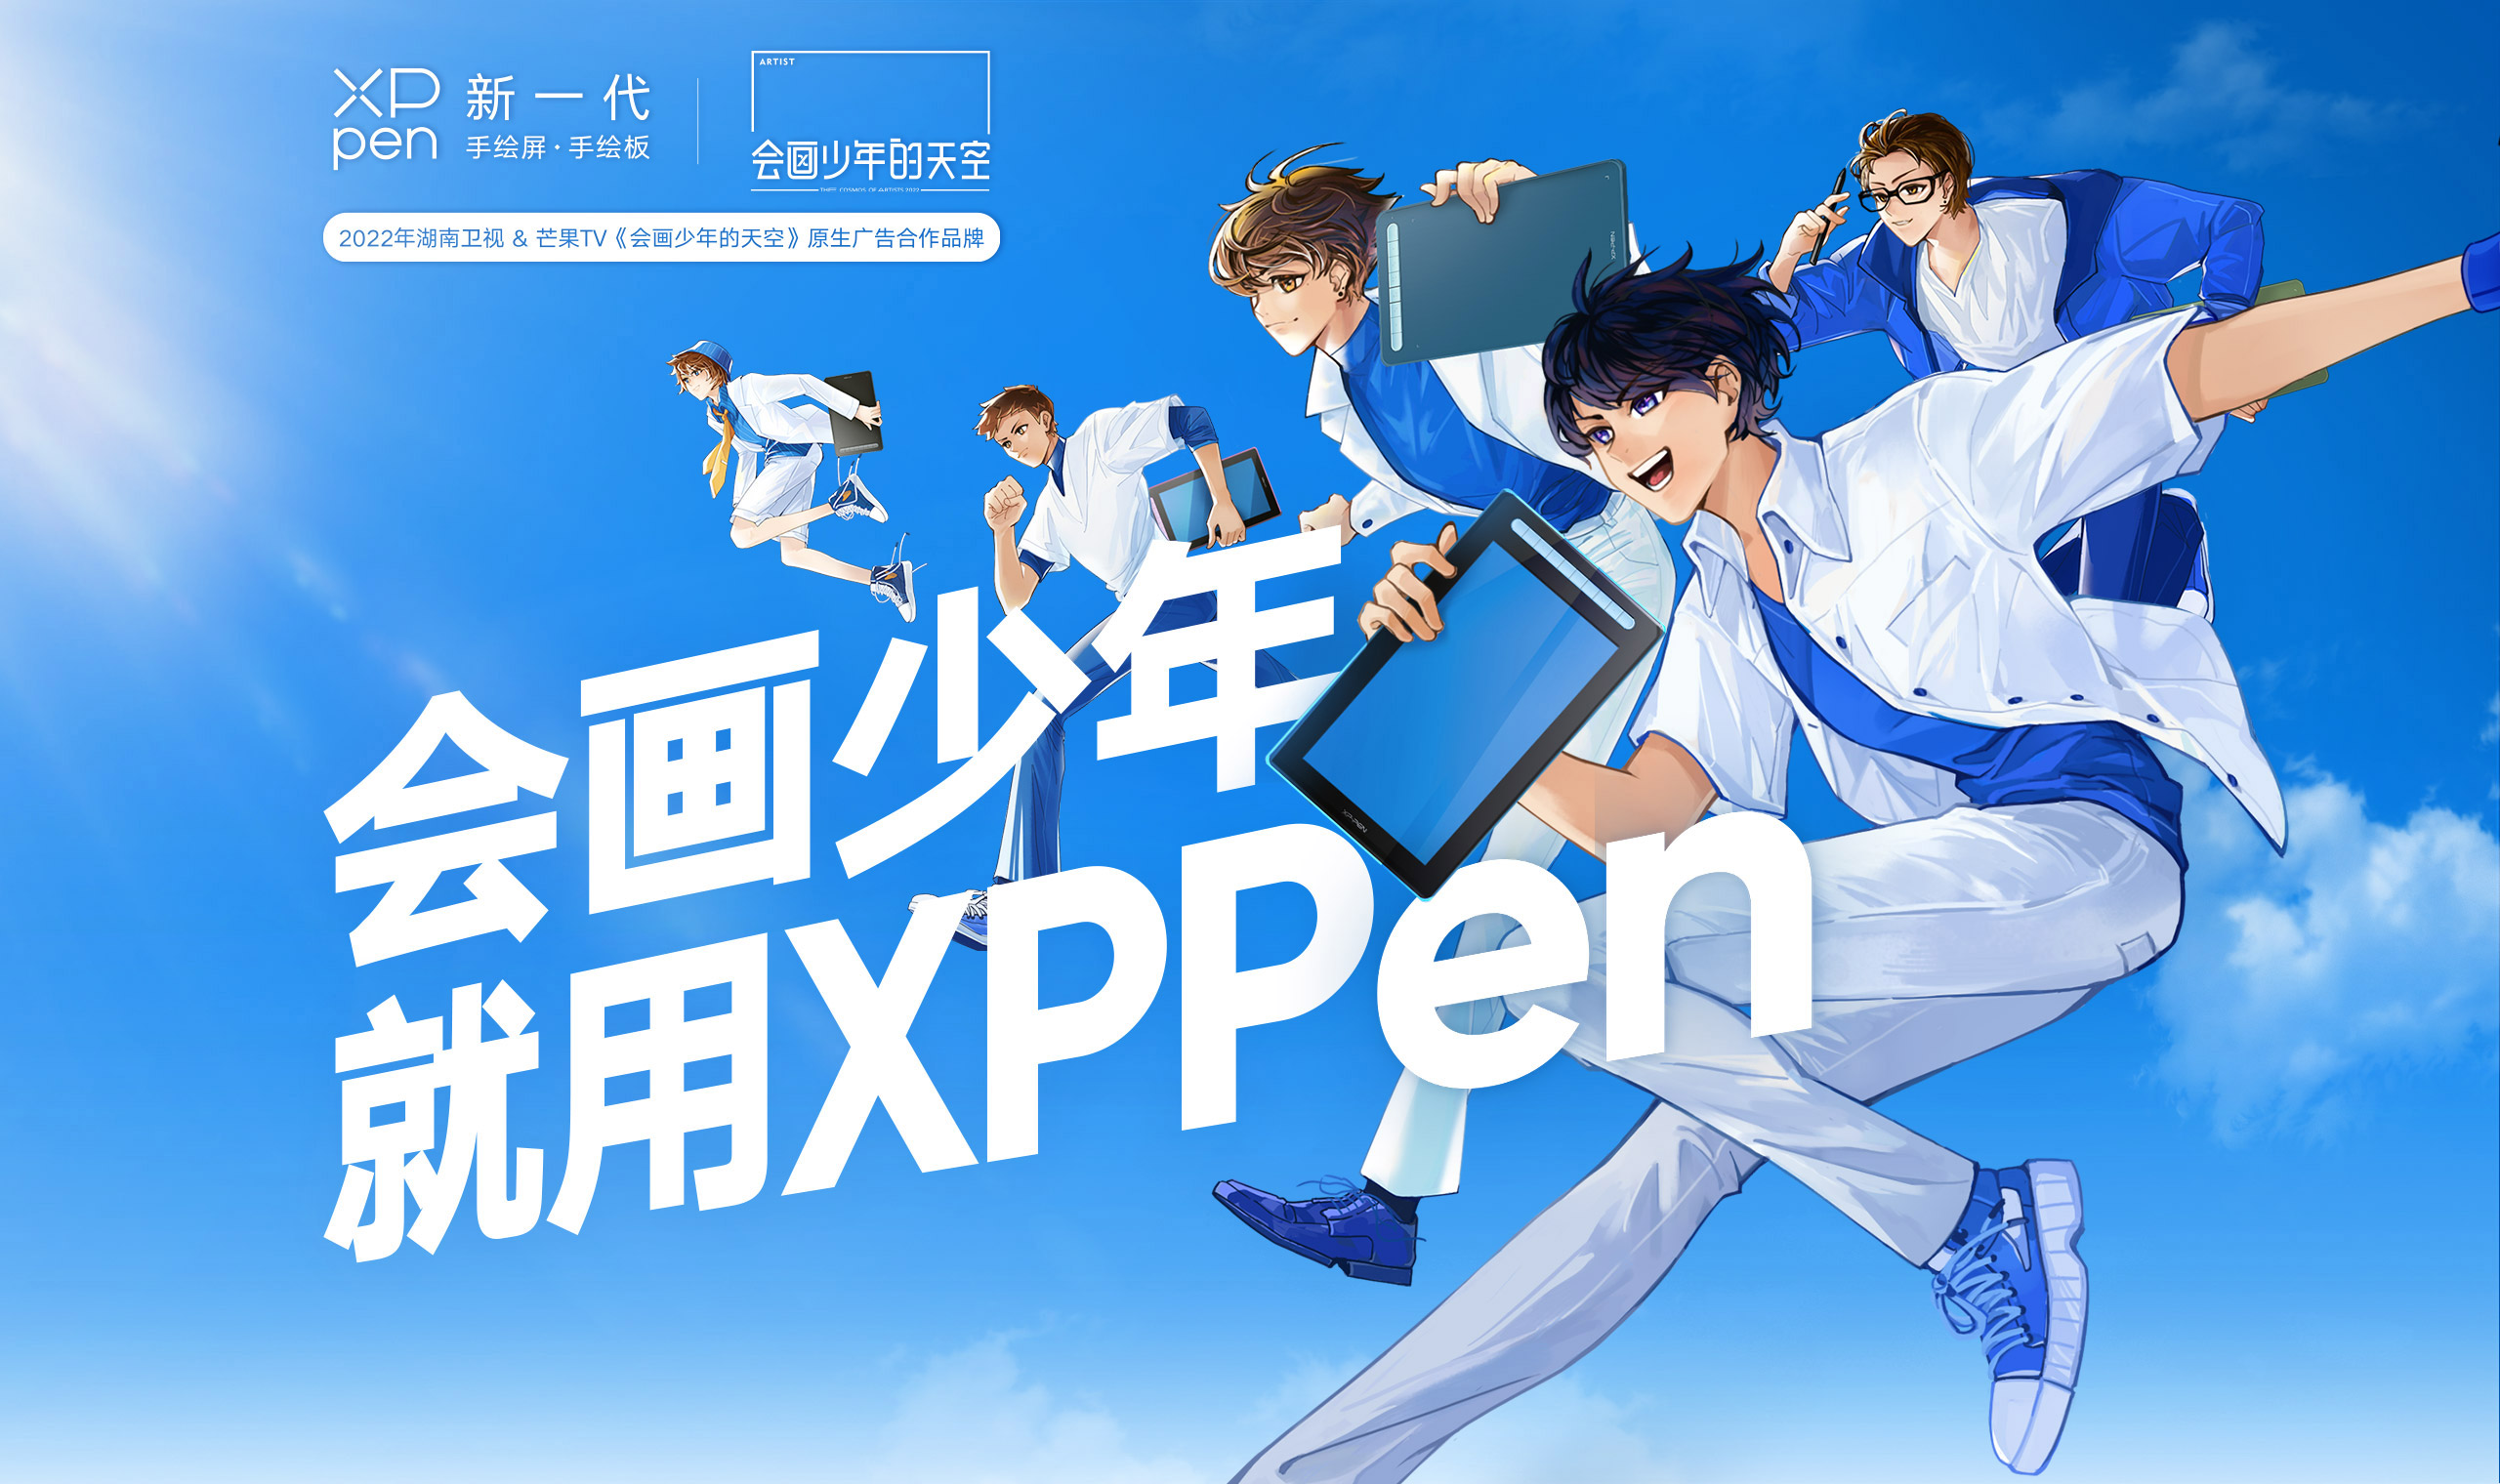 XPPen加盟会画少年的天空